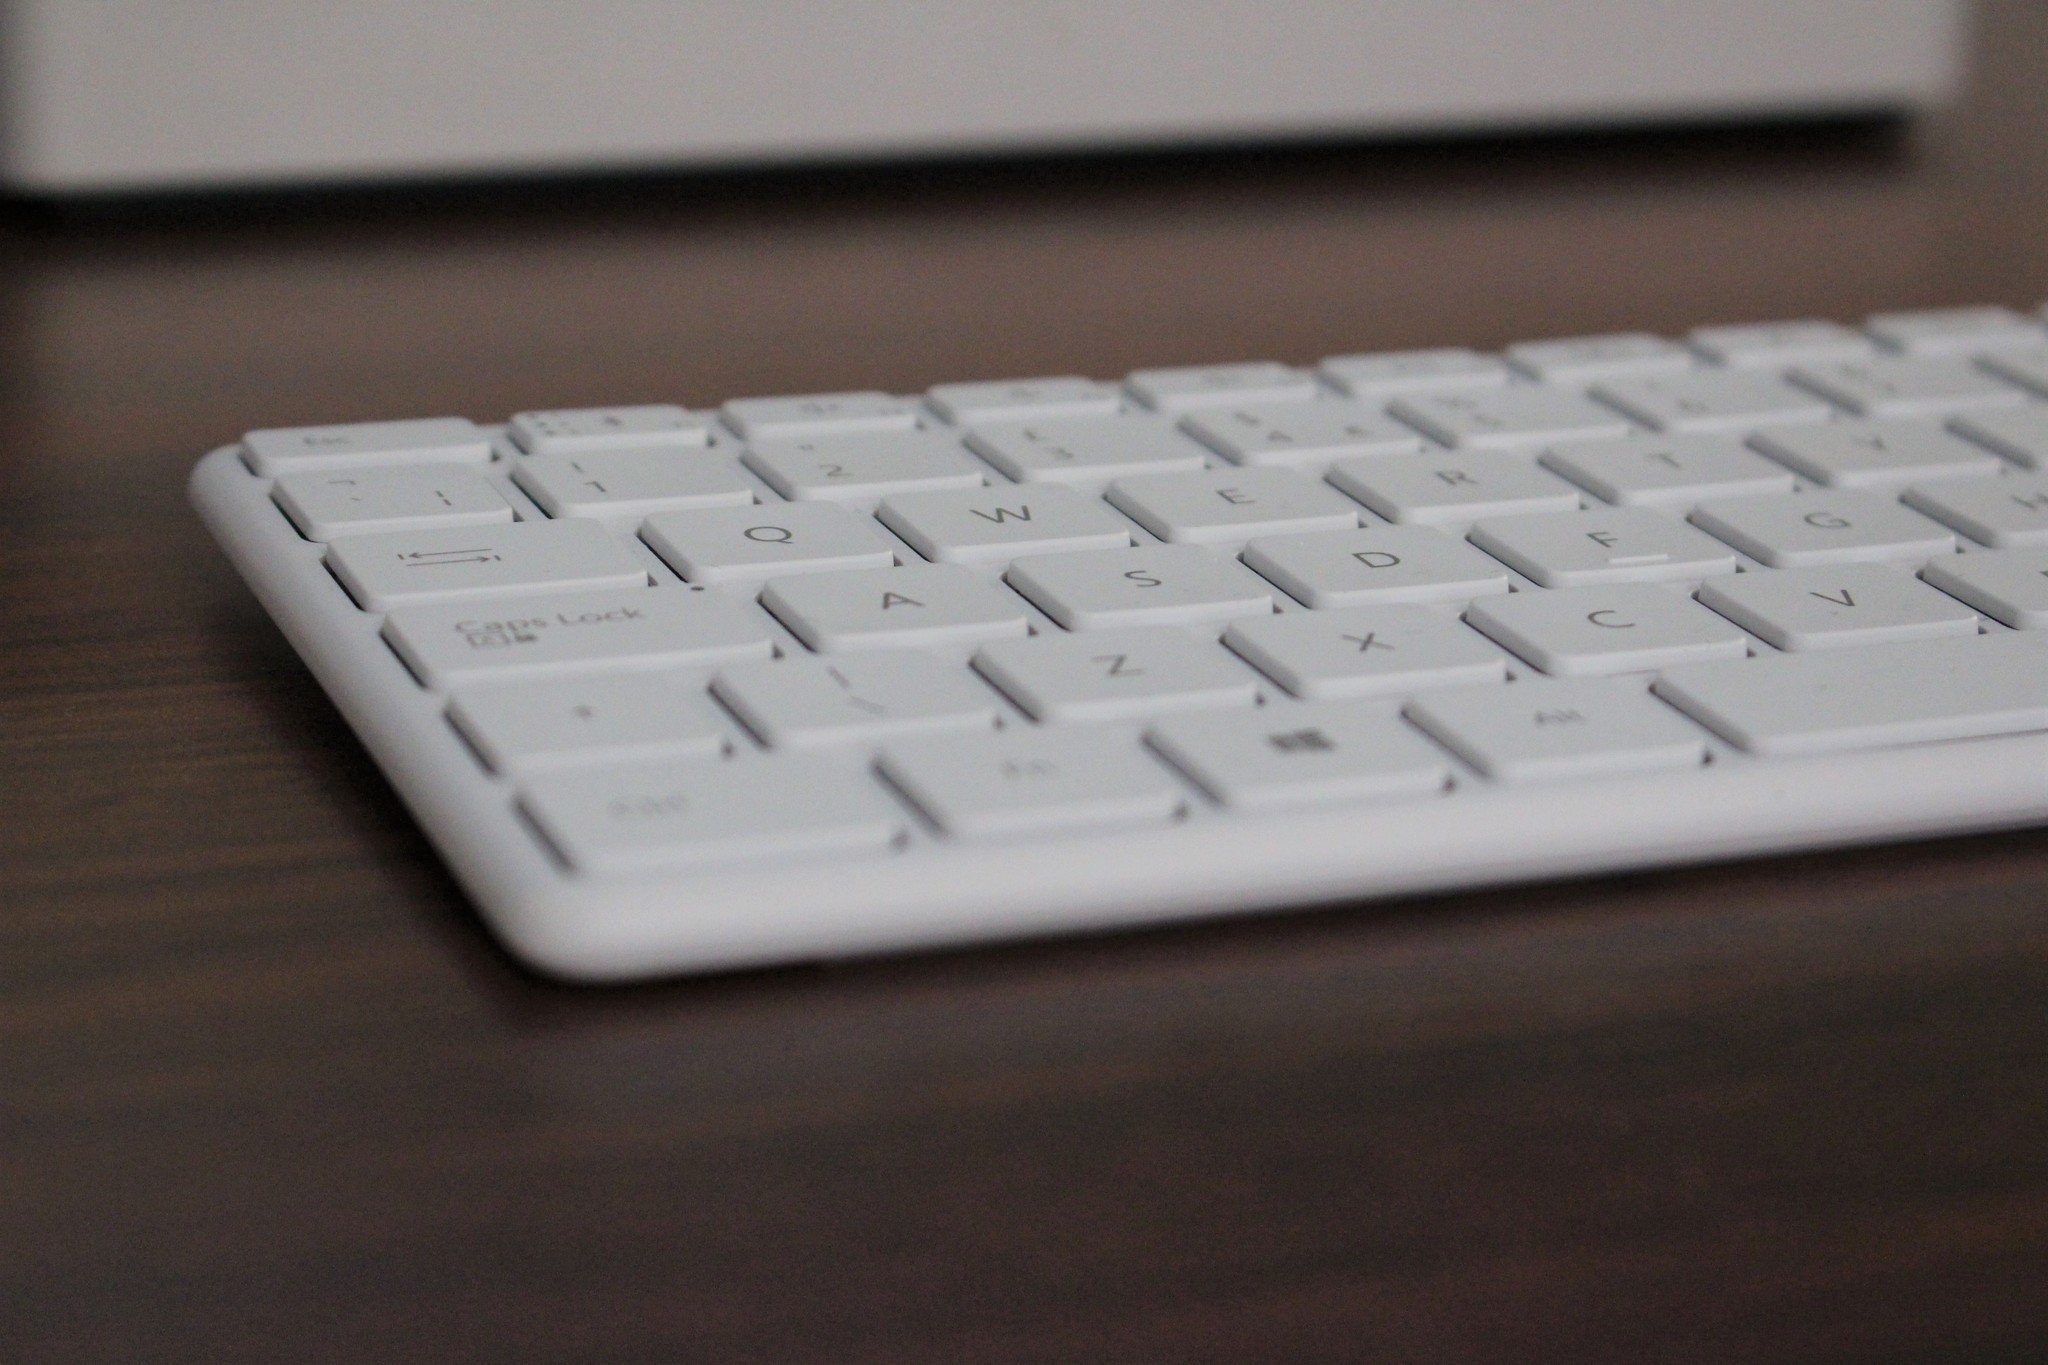 Designer Compact Keyboard Keys